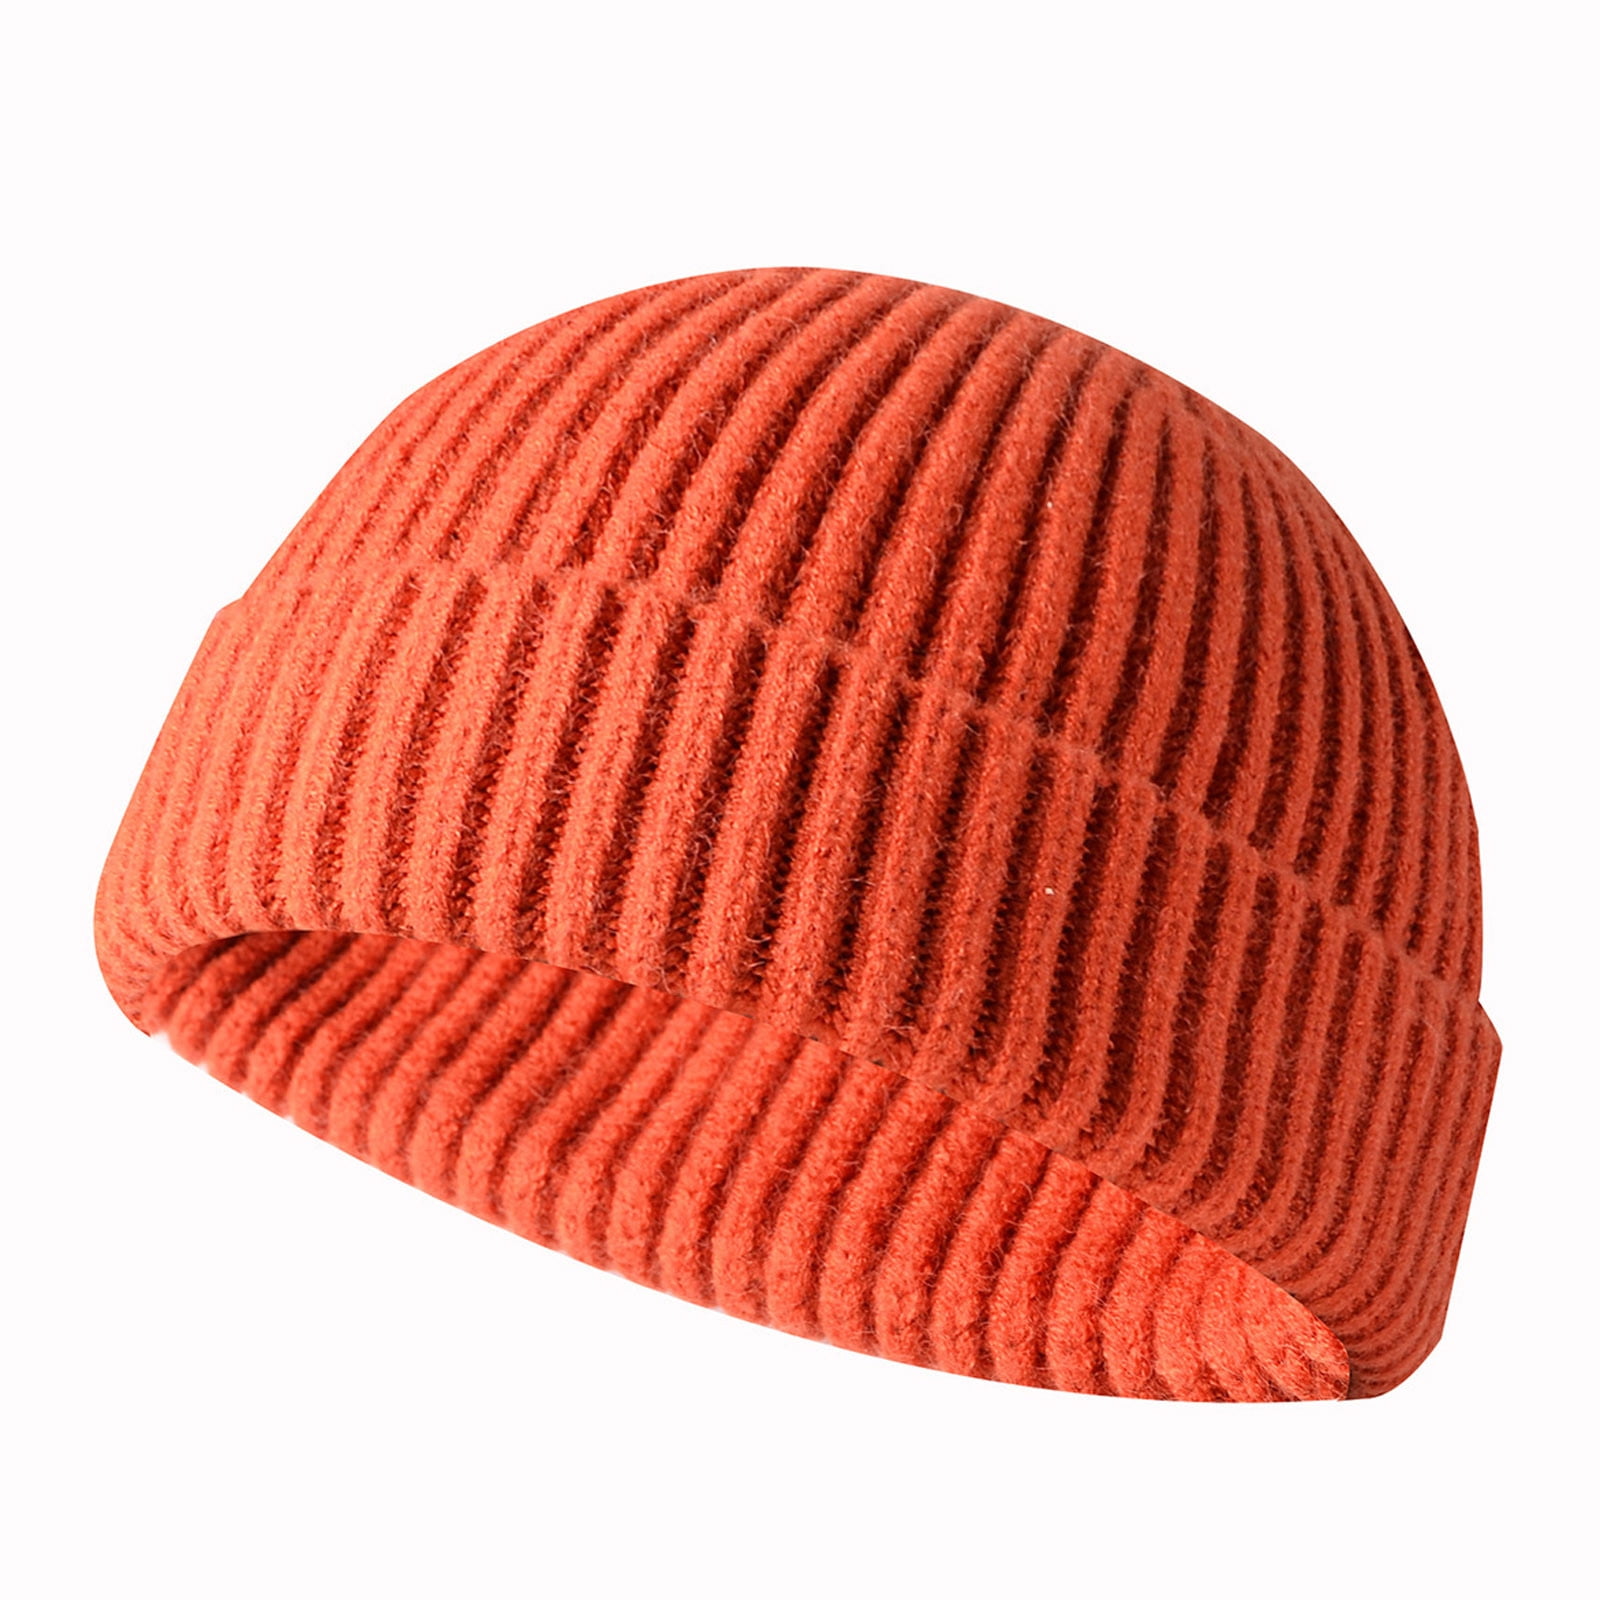 CYC Acrylic Winter Womens Knit Knitted Hat Cap Men Warm For Women ...